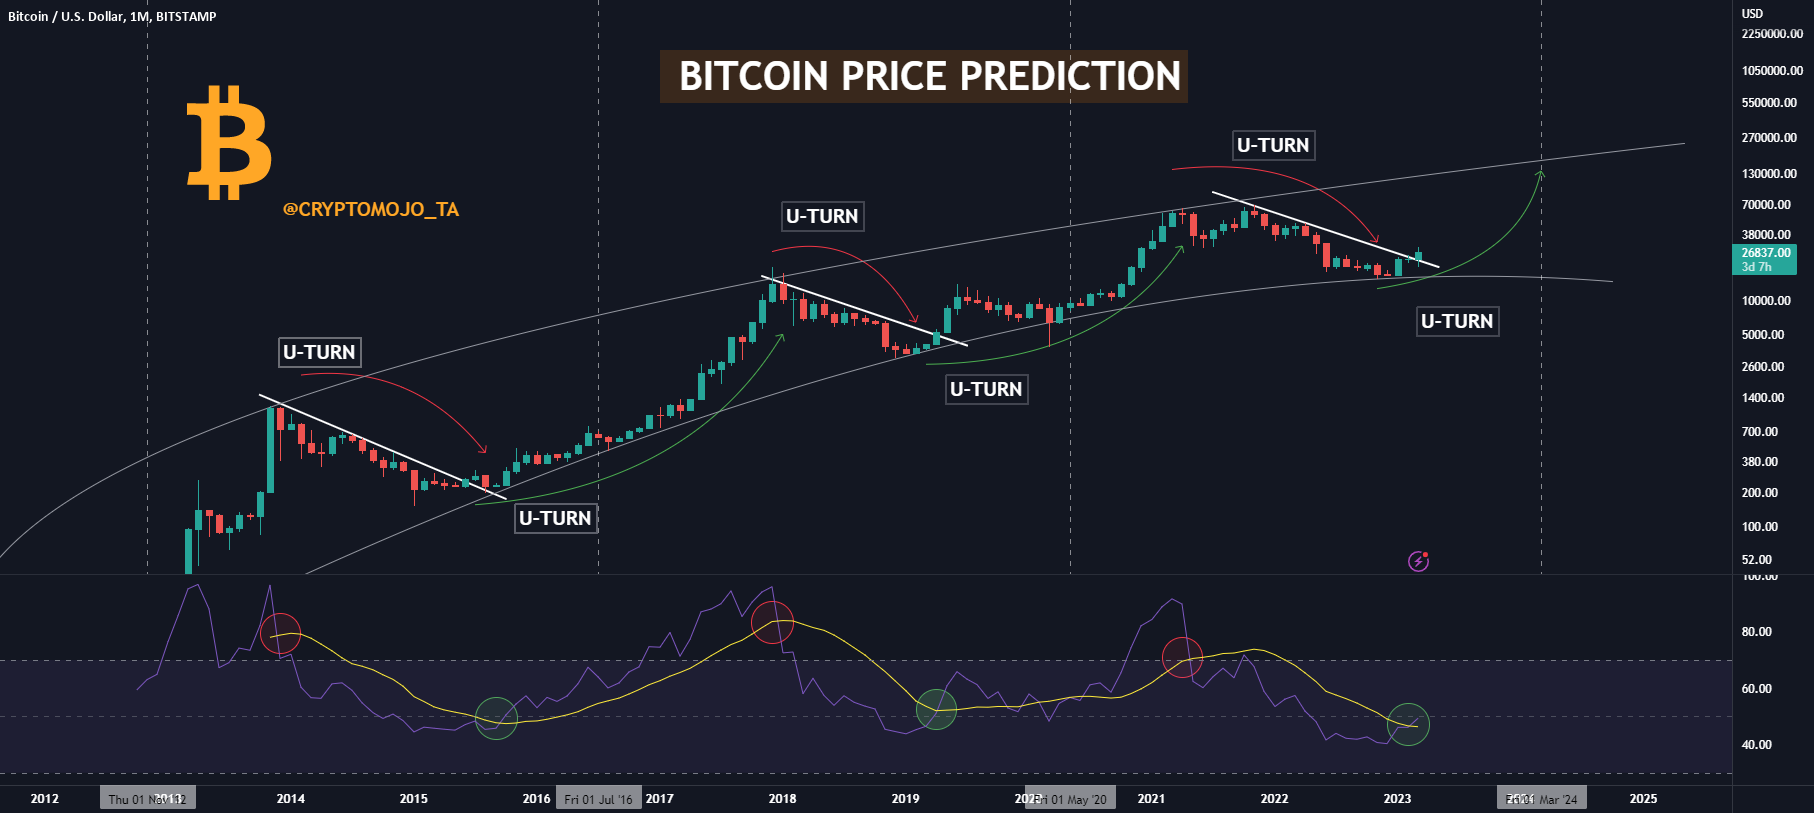 Bitcoin Rainbow chart predicts BTC's price for Jan 1, 